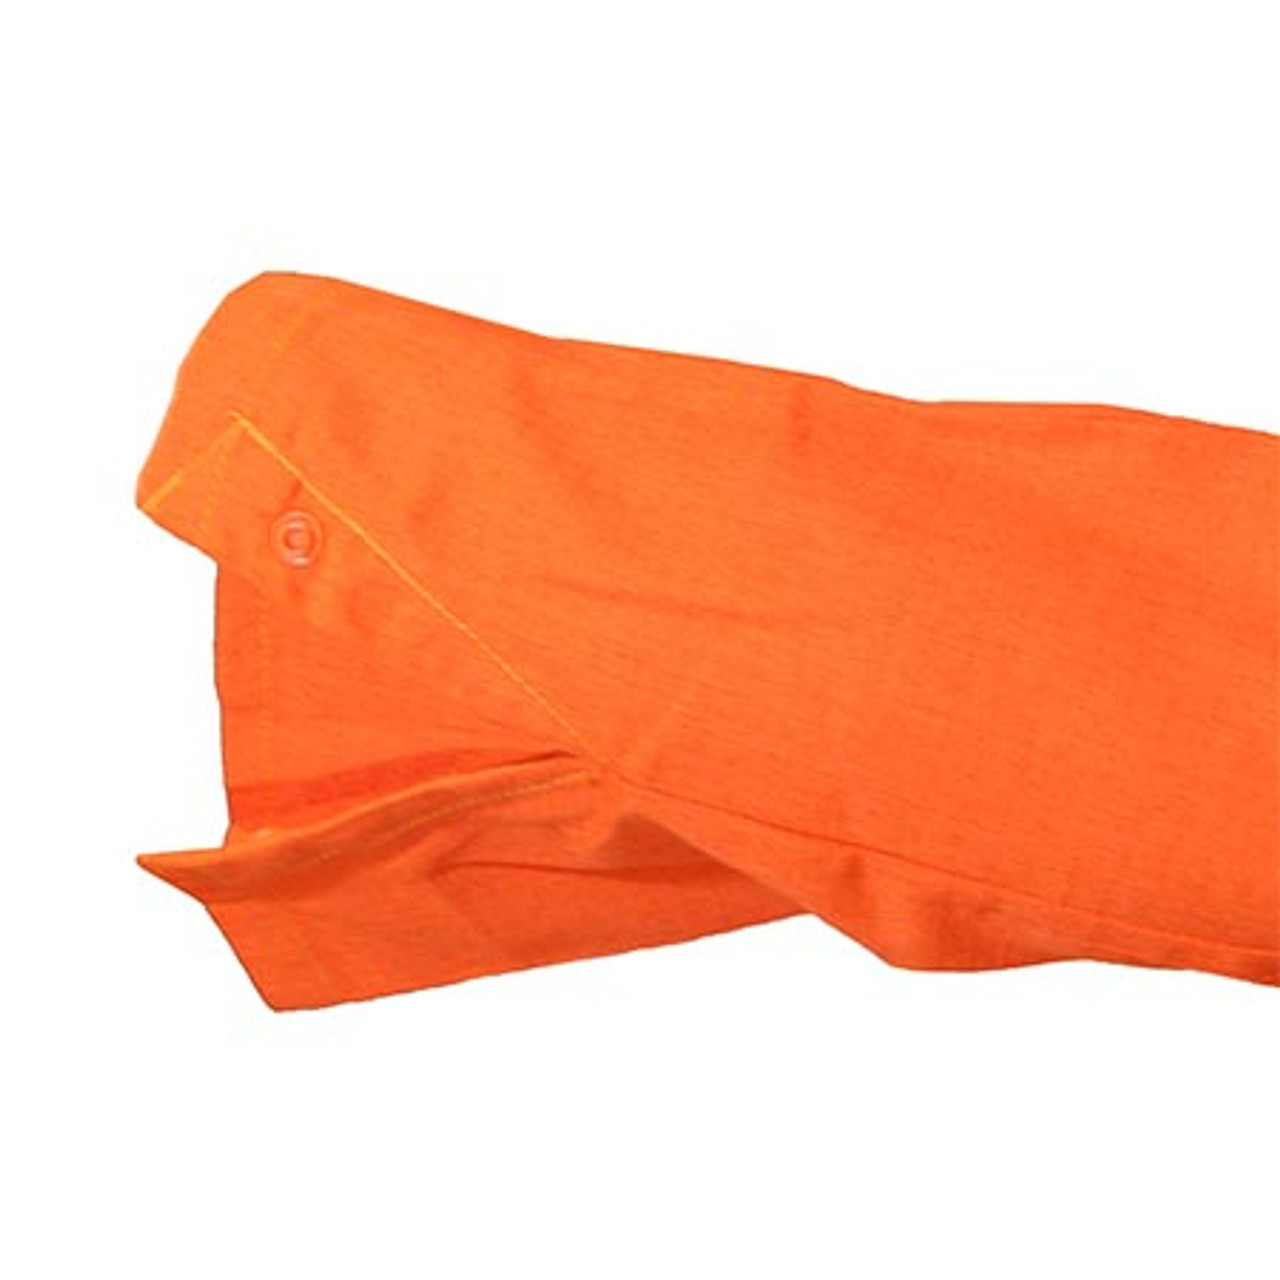 Inherent FR Coverall - Orange